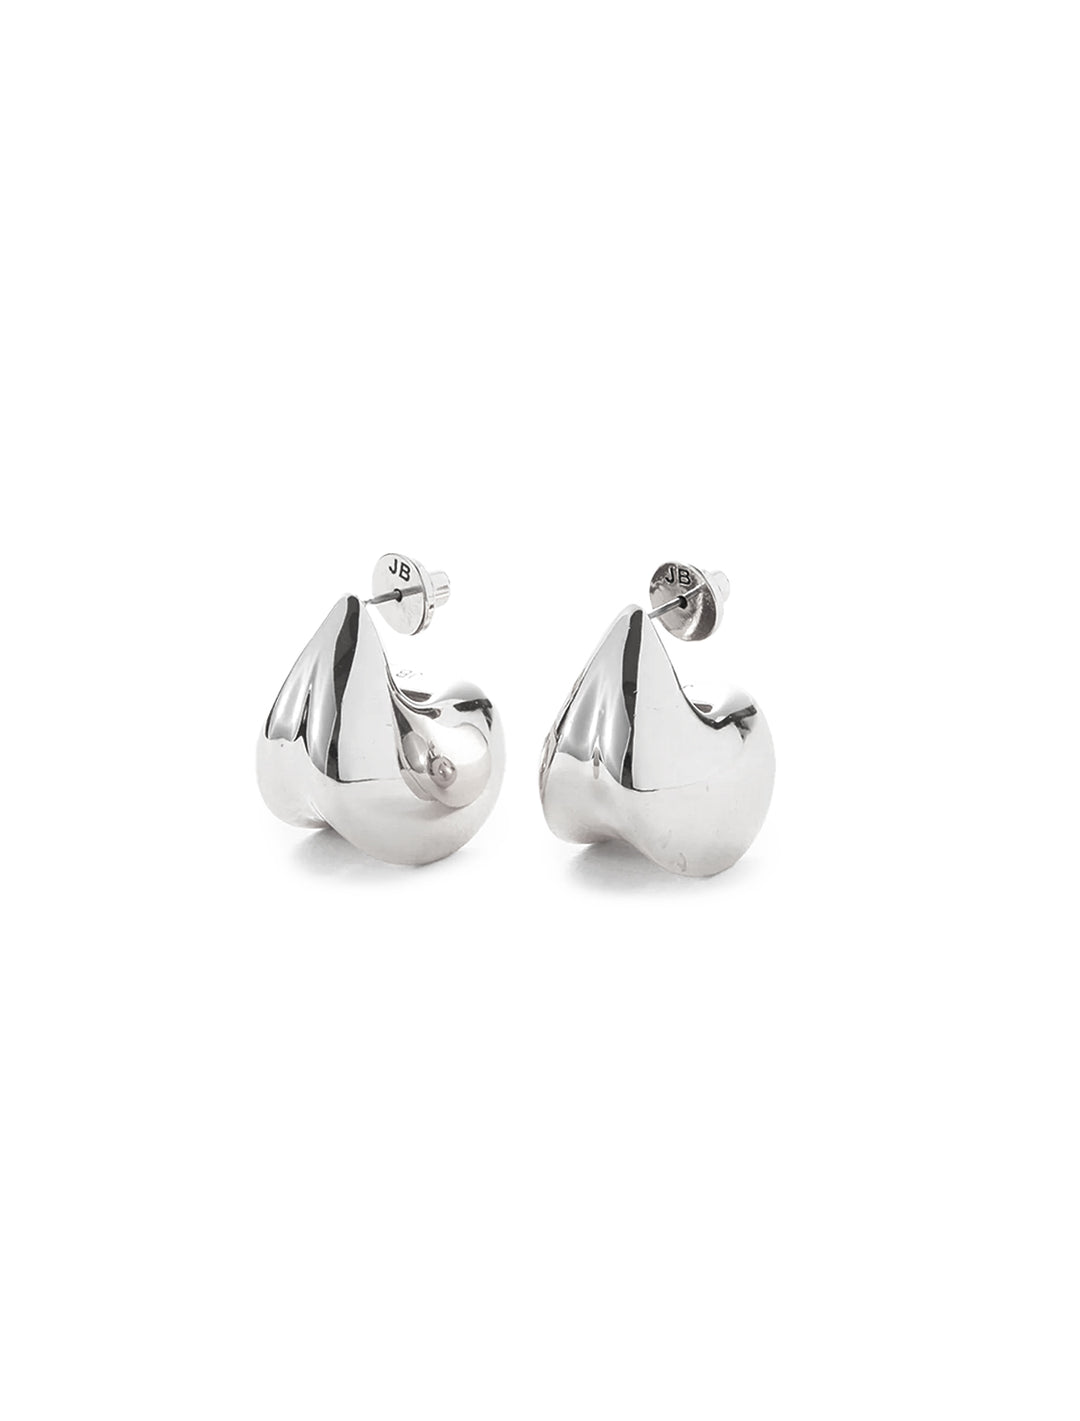 Alternative front view of Jenny Bird's nouveaux puff earrings in silver.